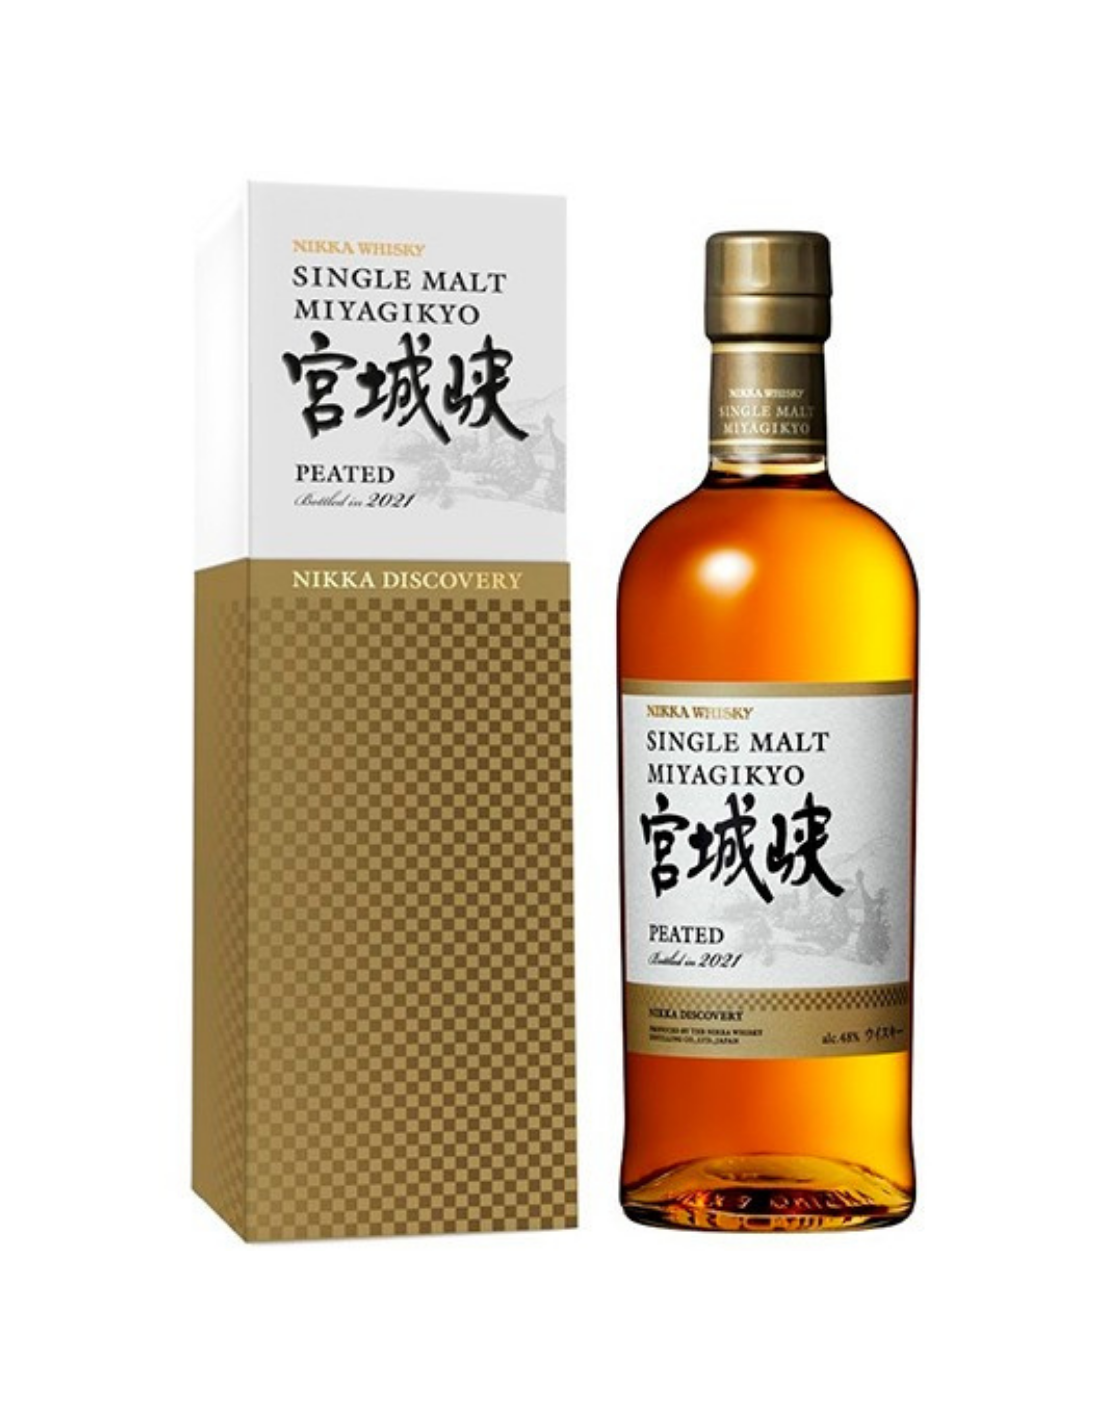 Whisky Nikka Miyagikyo Peated Single Malt 2021 Edition, 0.7L, 48% alc., Japonia alcooldiscount.ro